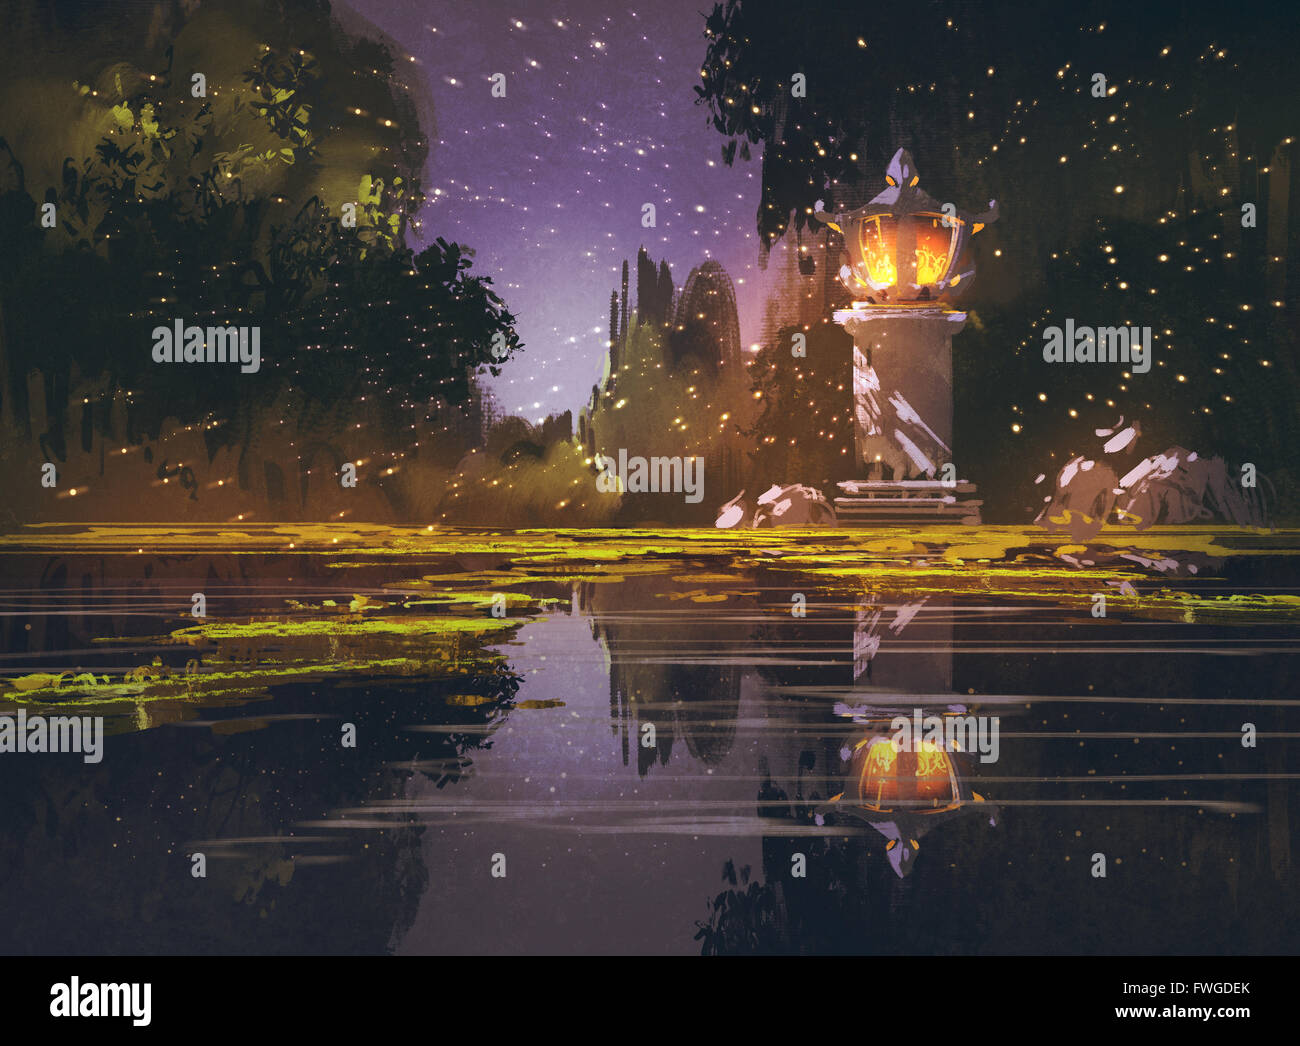 night landscape with stone lantern,illustration painting Stock Photo